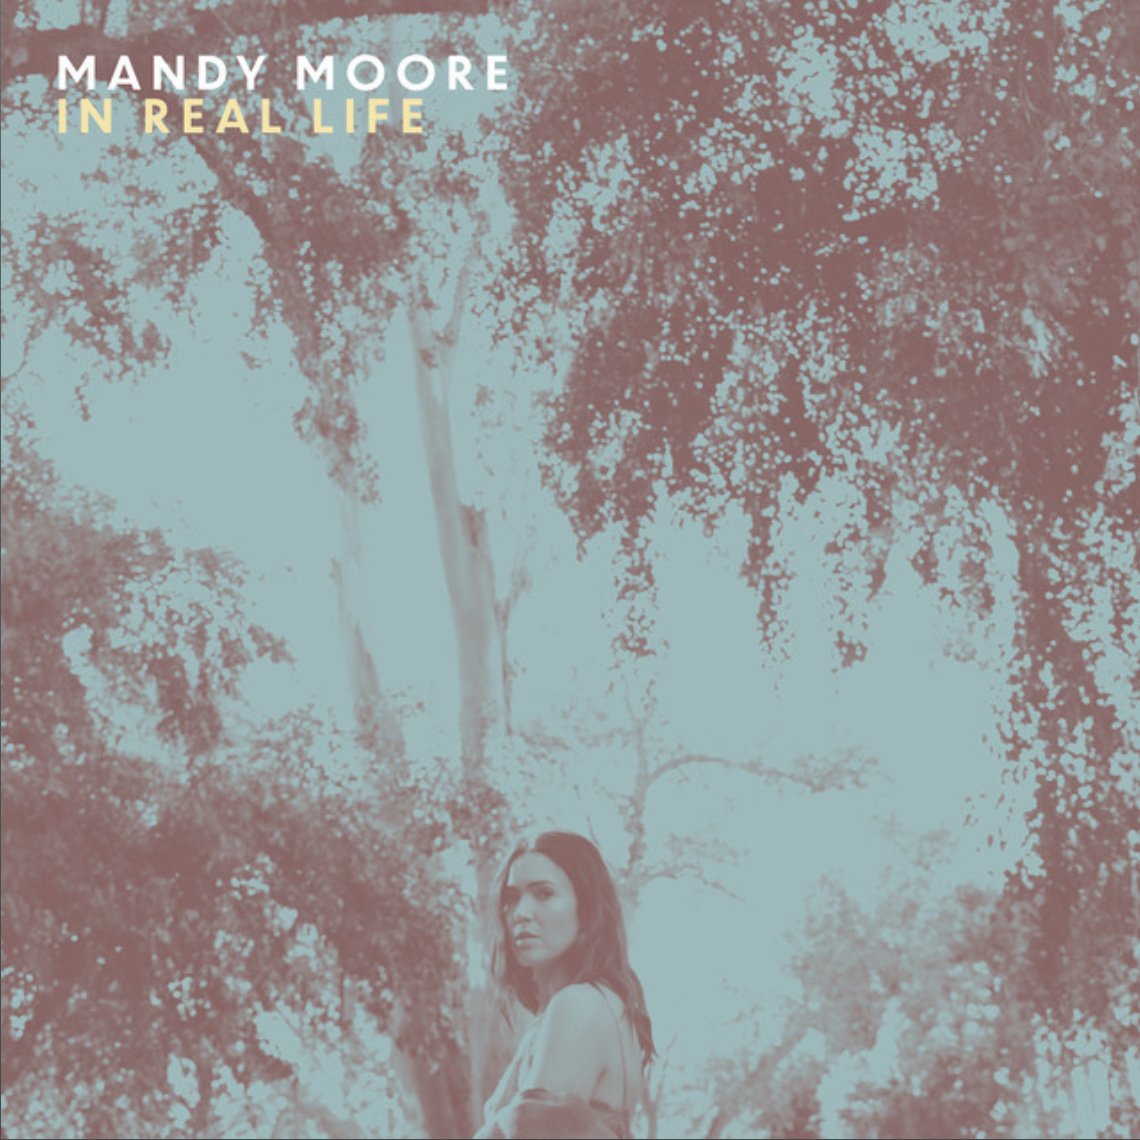 Mandy Moore-In Real Life-16BIT-WEBFLAC-2022-MyDad